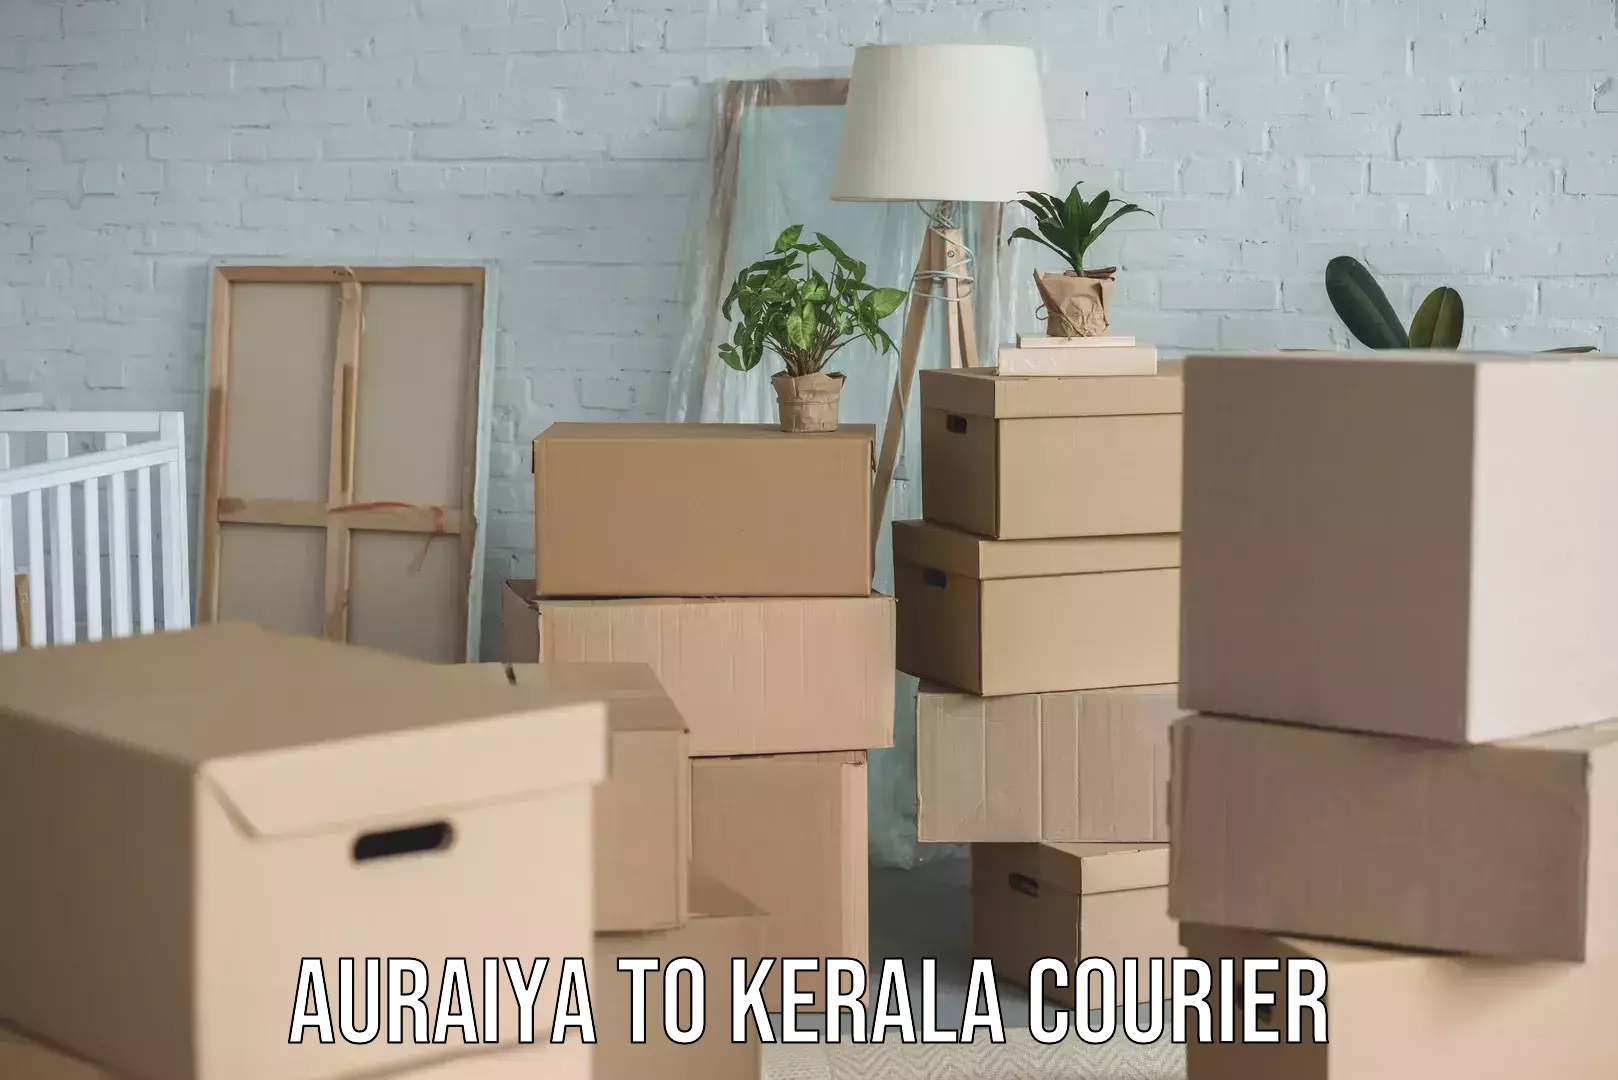 Nationwide delivery network Auraiya to Kerala